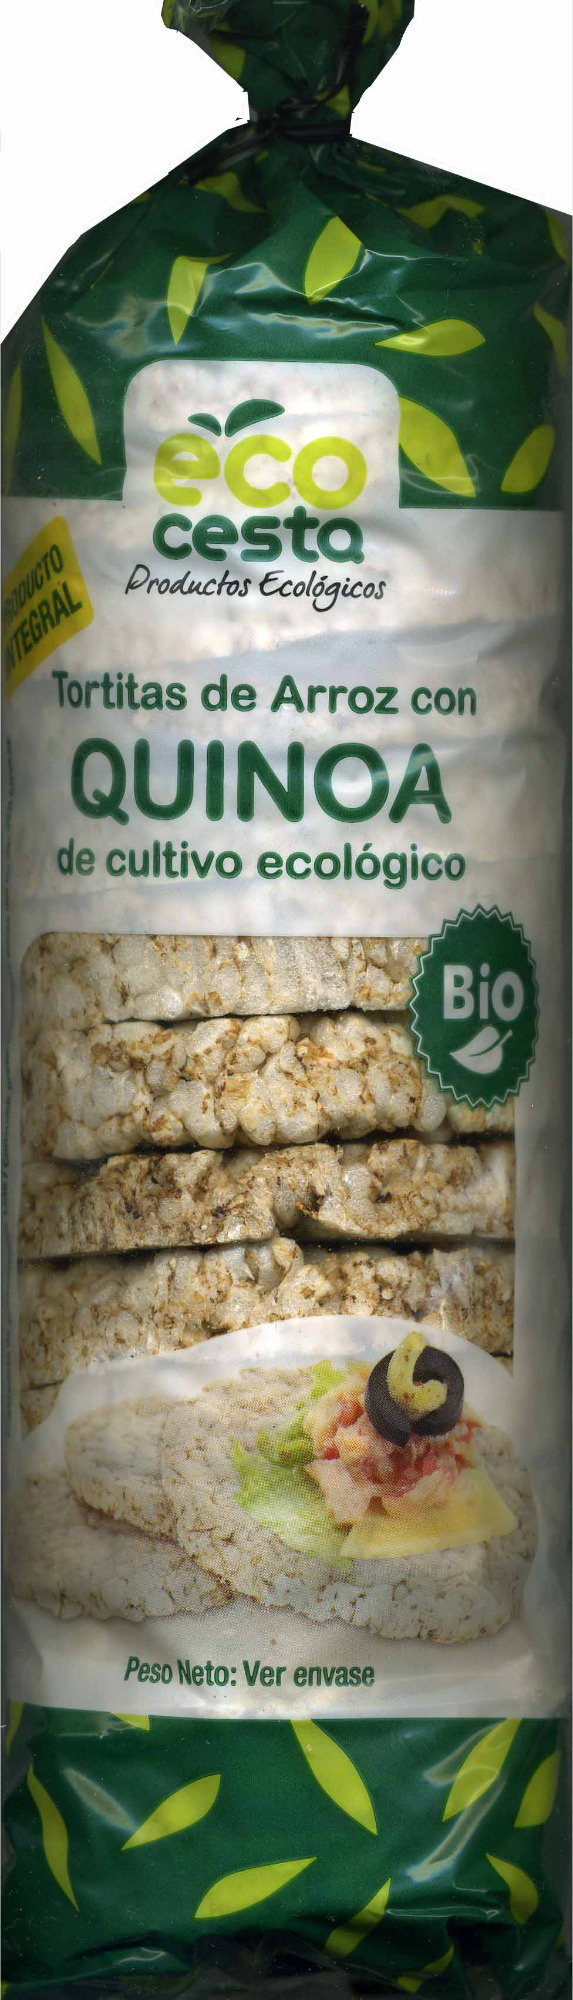 Tortitas de arroz con quinoa - Product - es